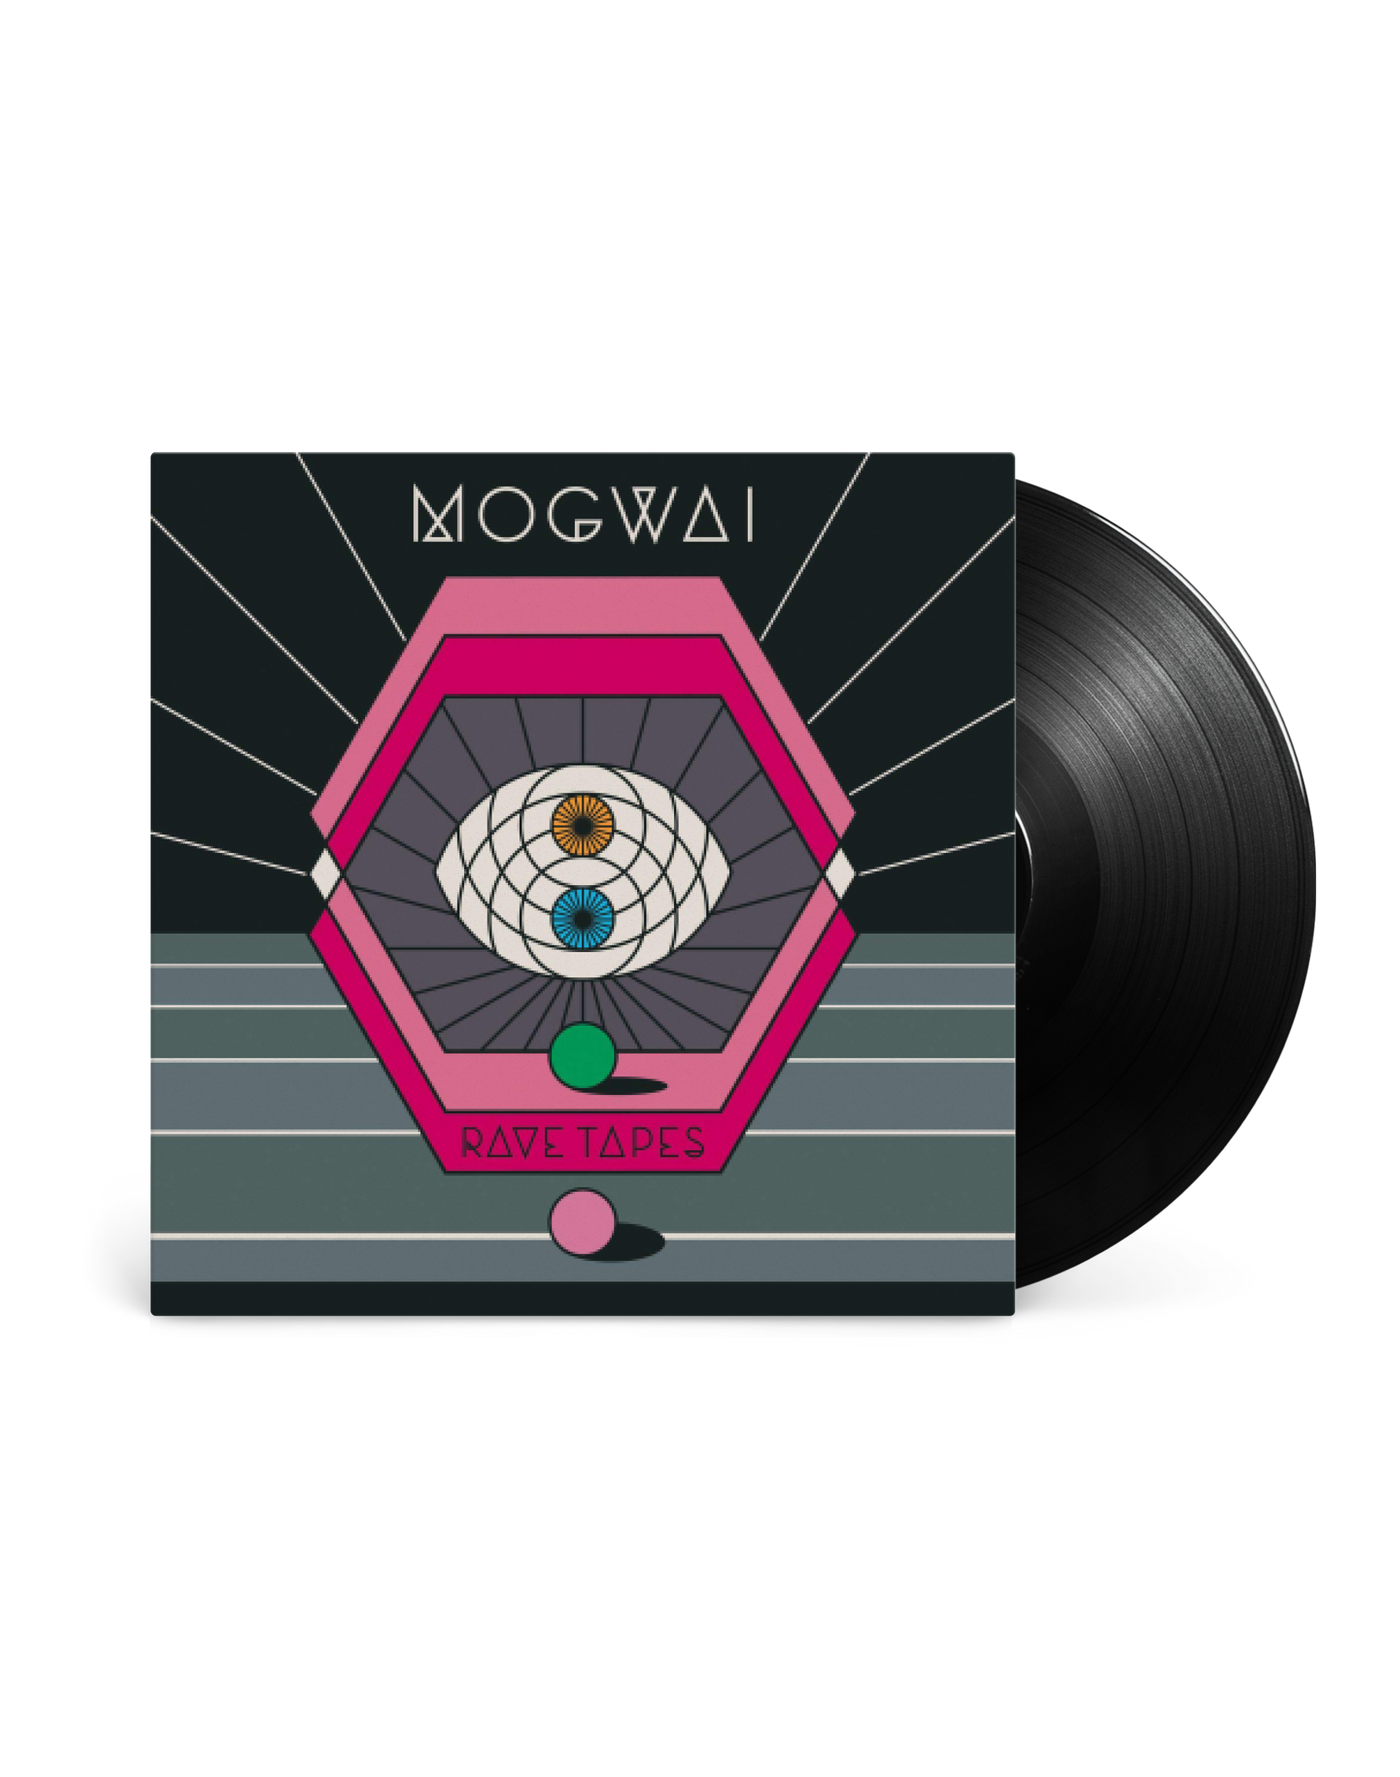 Vinilo 12” - Mogwai Rave Tapes